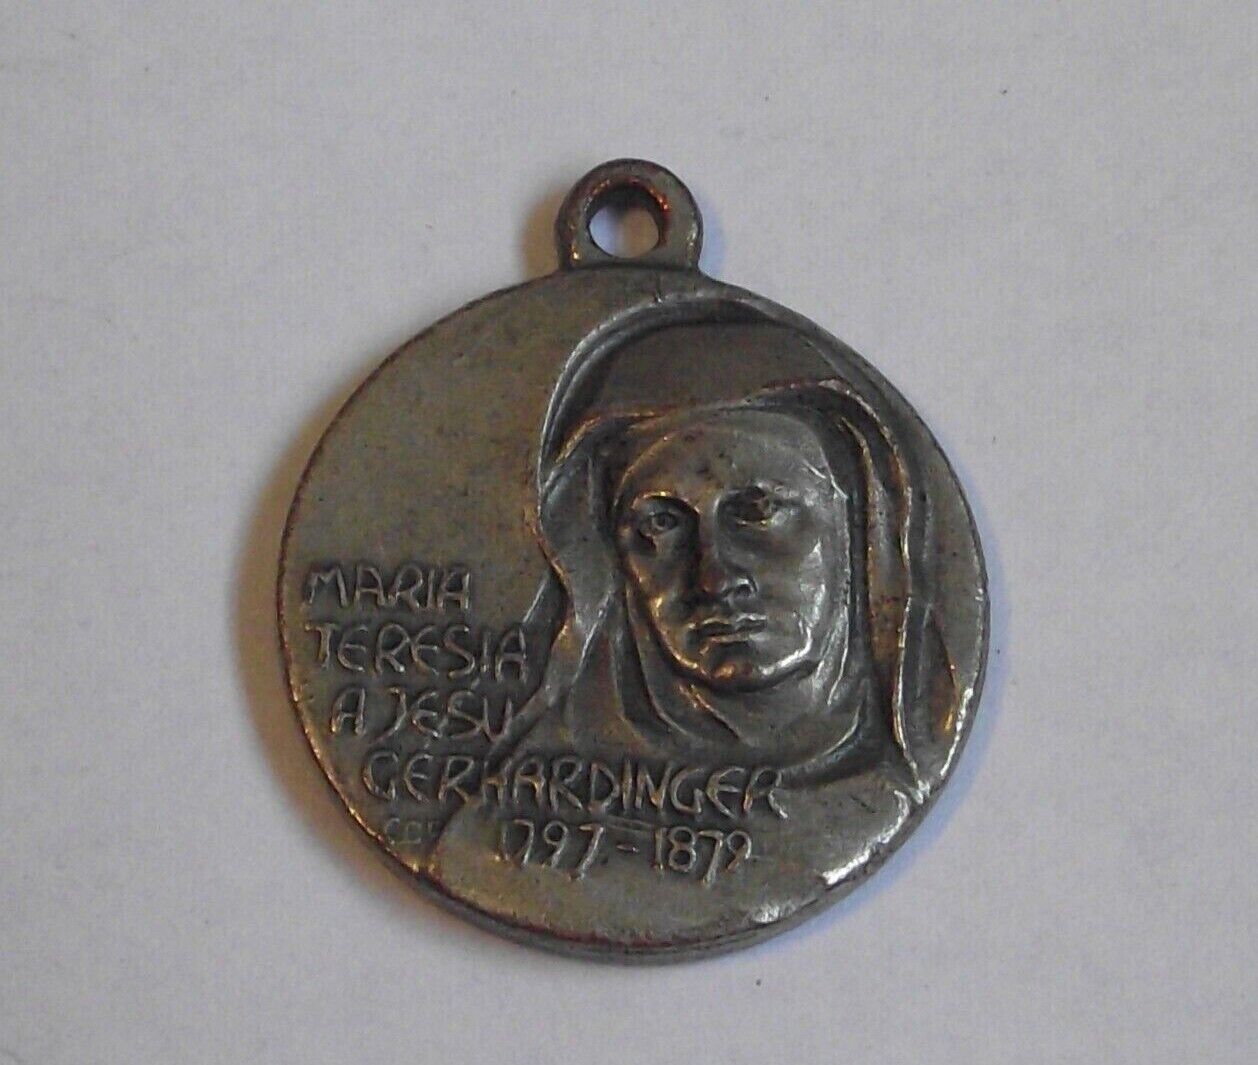 Vintage St Therese Maria Teresia a Jesu Gerhardinger CDF 1797- 1879 Italy medal